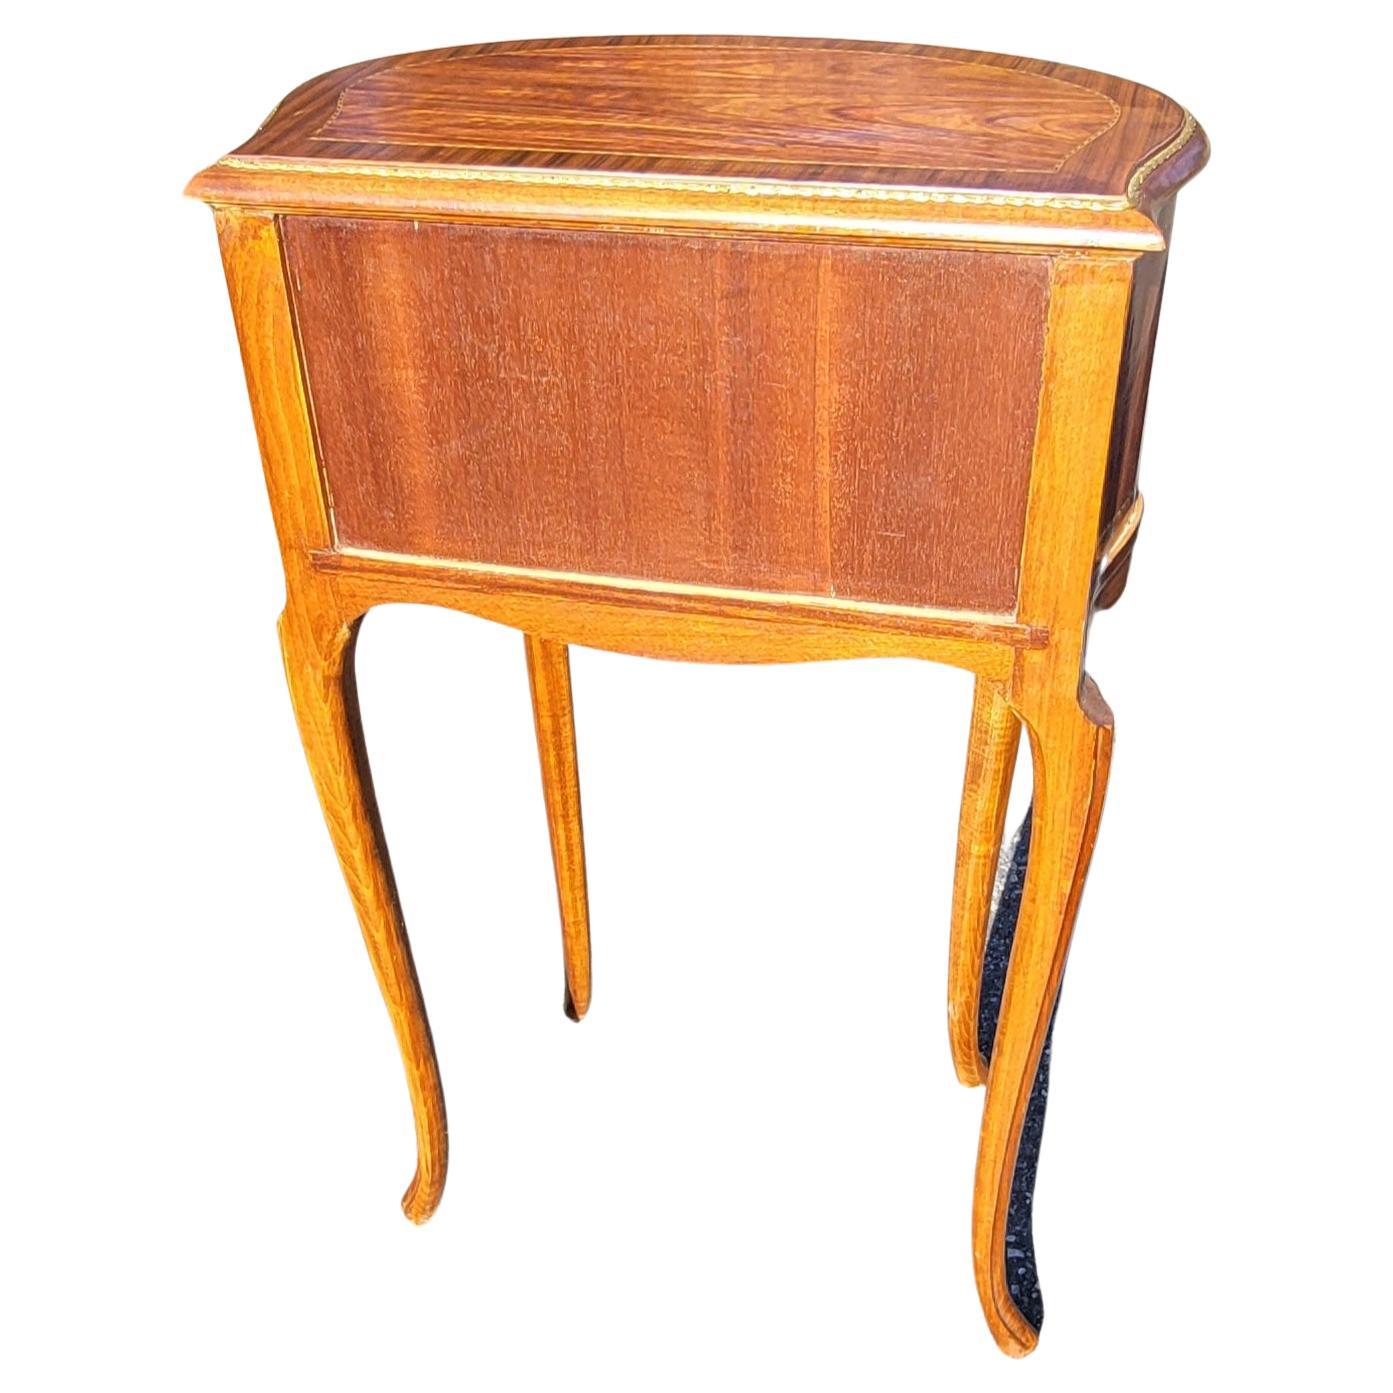 20th Century French Louis XV Walnut Kingwood Satinwood Inlaid Ormolu Side Table For Sale 4